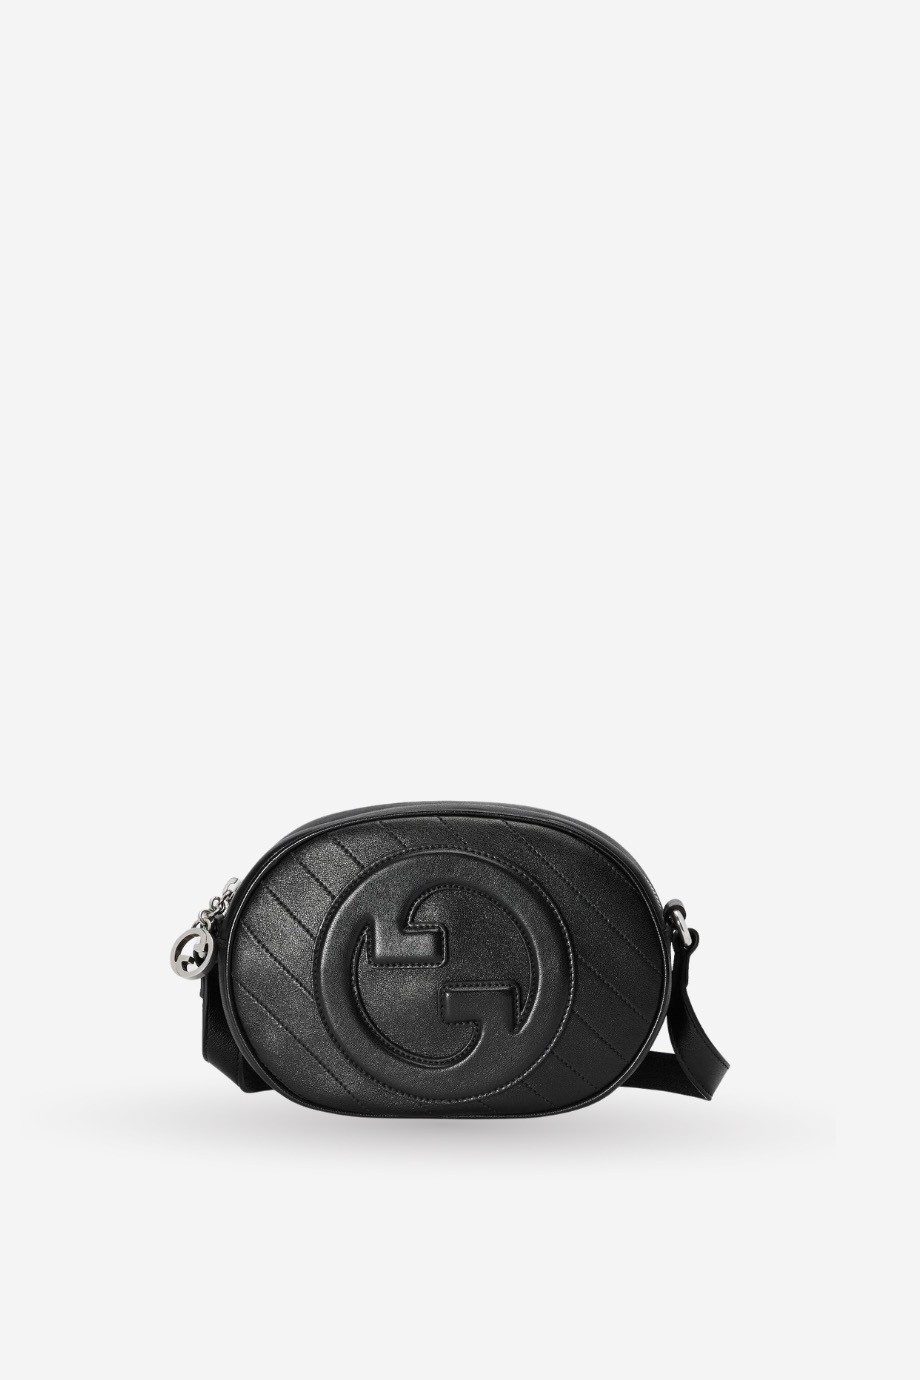 Gucci - Blondie Mini Shoulder Bag - Black